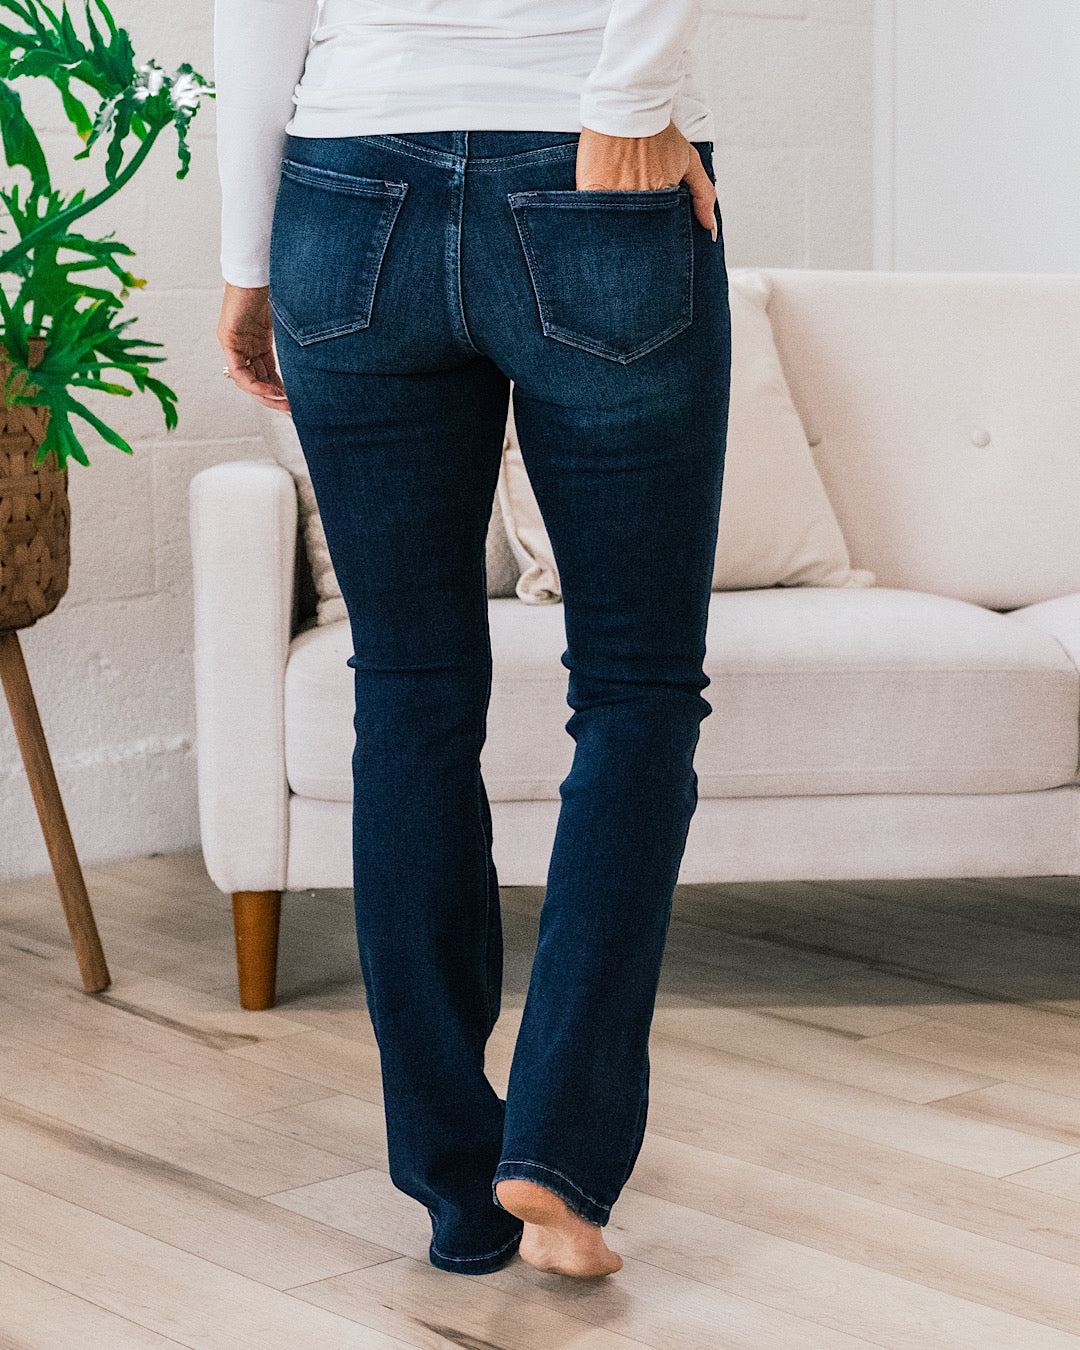 KanCan Jene Non Distressed Skinny Bootcut Jeans FINAL SALE  KanCan   